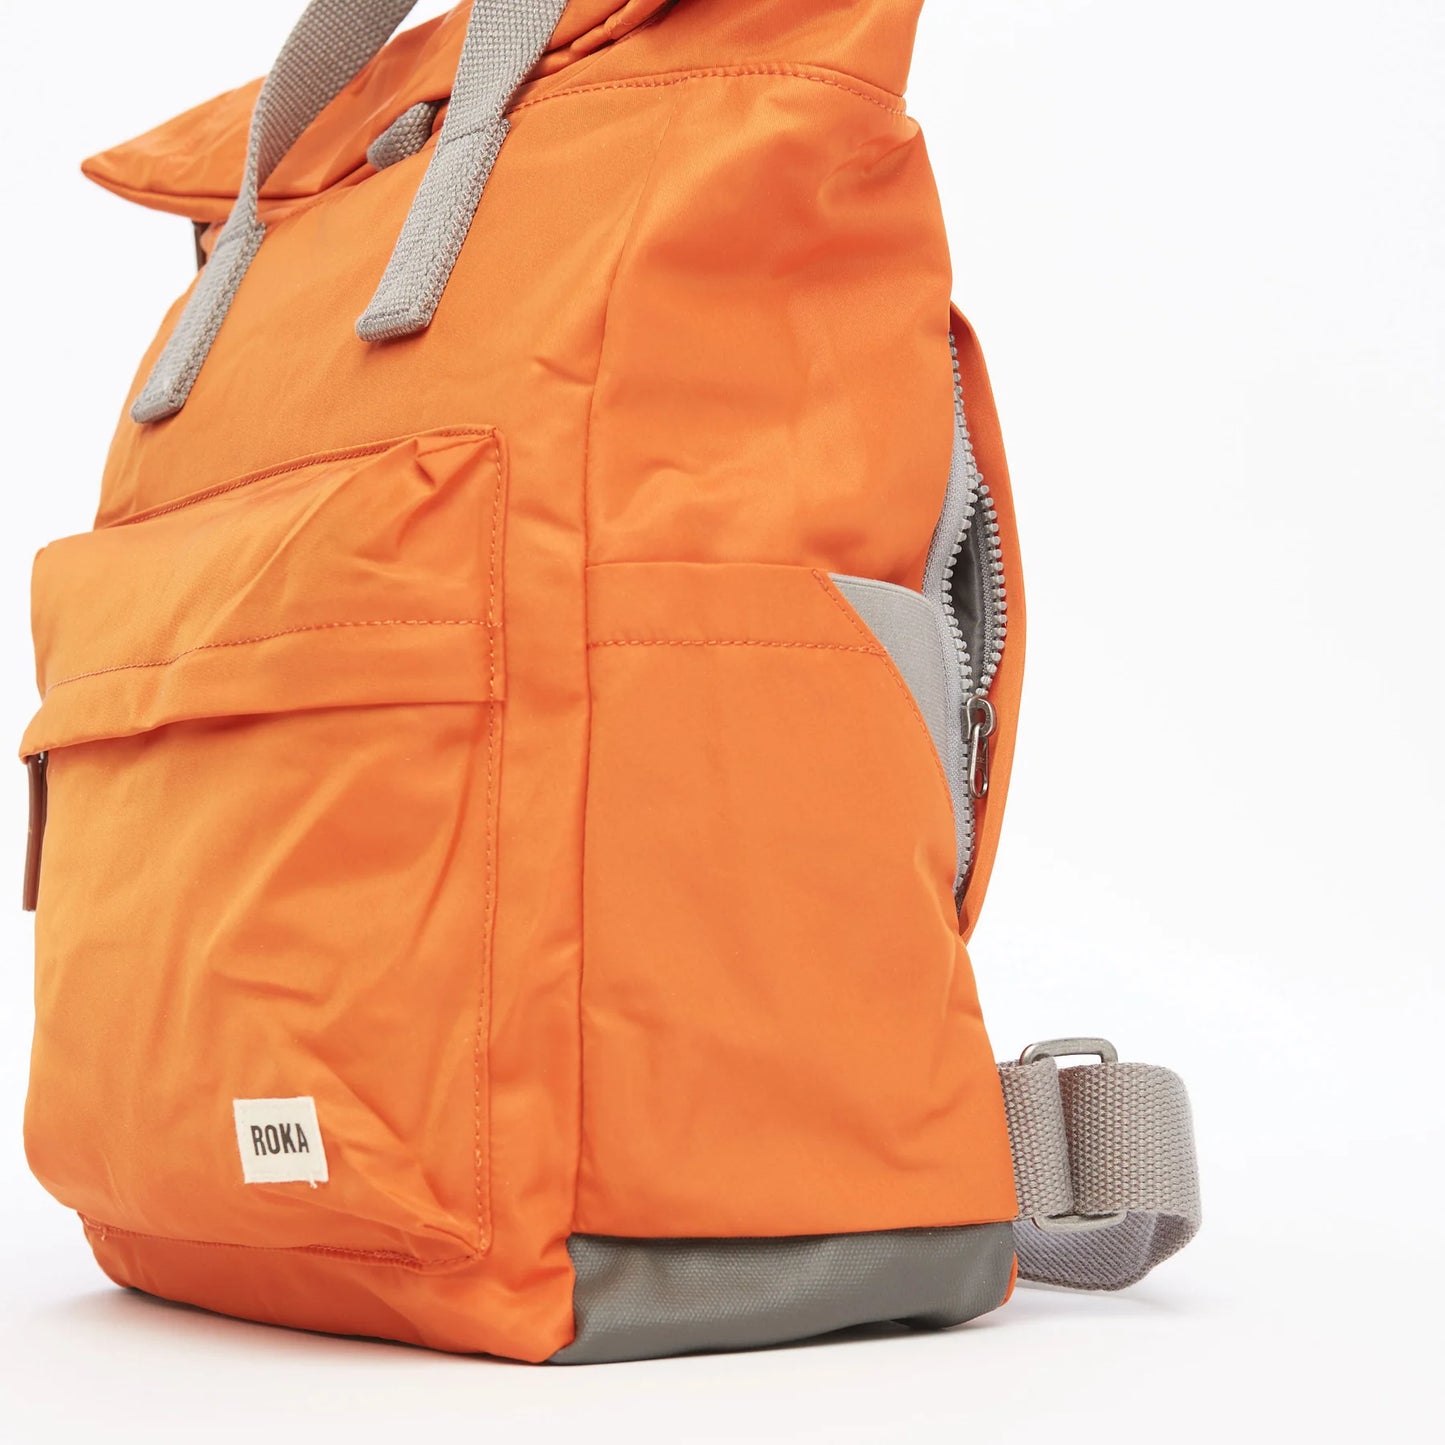 Heliotique | Roka Medium Canfield B Recycled Nylon Backpack - Orange